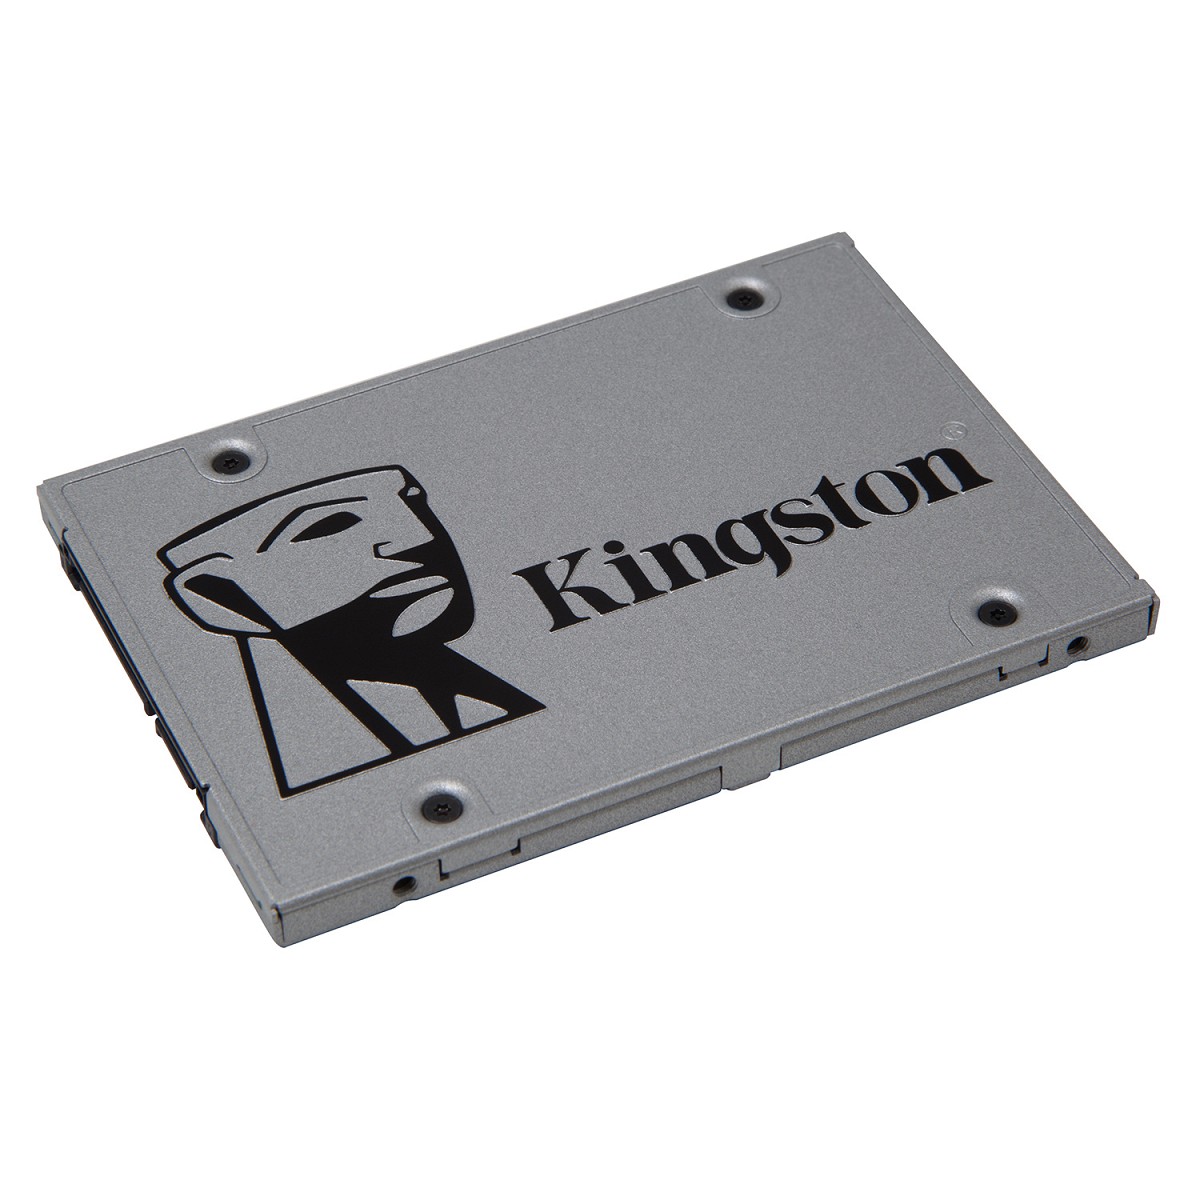 SSD Kingston SUV400 120G - SUV400S37/120G